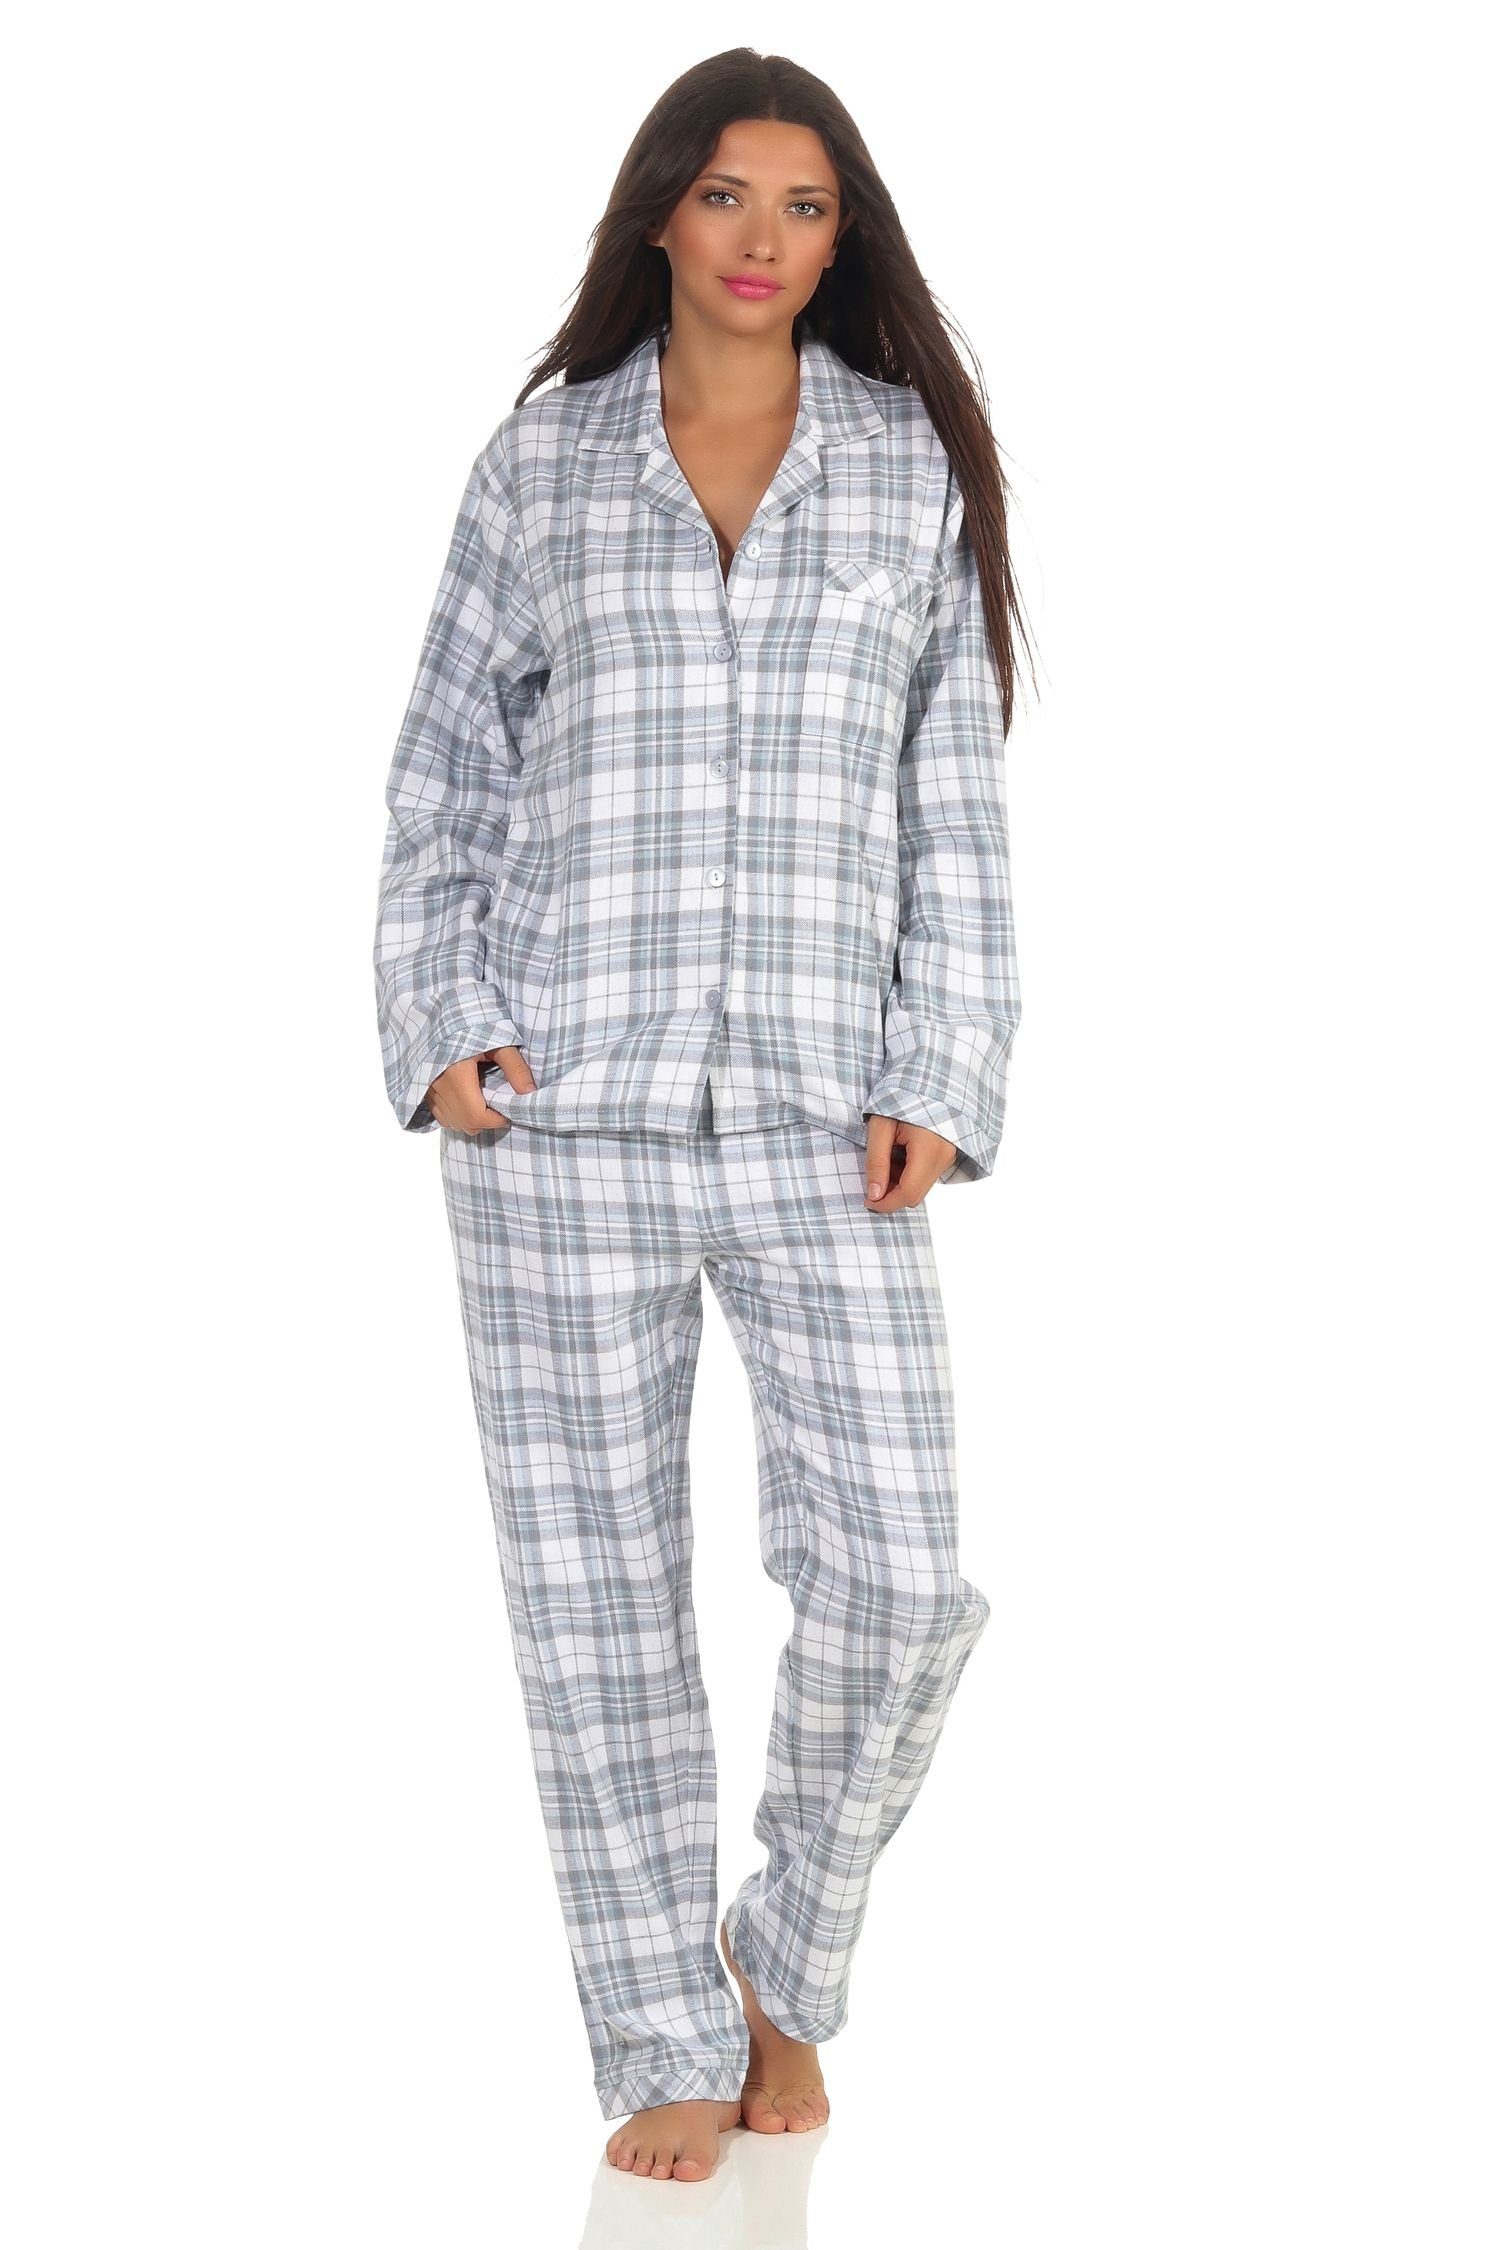 Normann Pyjama Damen langarm Flanell Schlafanzug kariert - 202 15 602 Karo blau